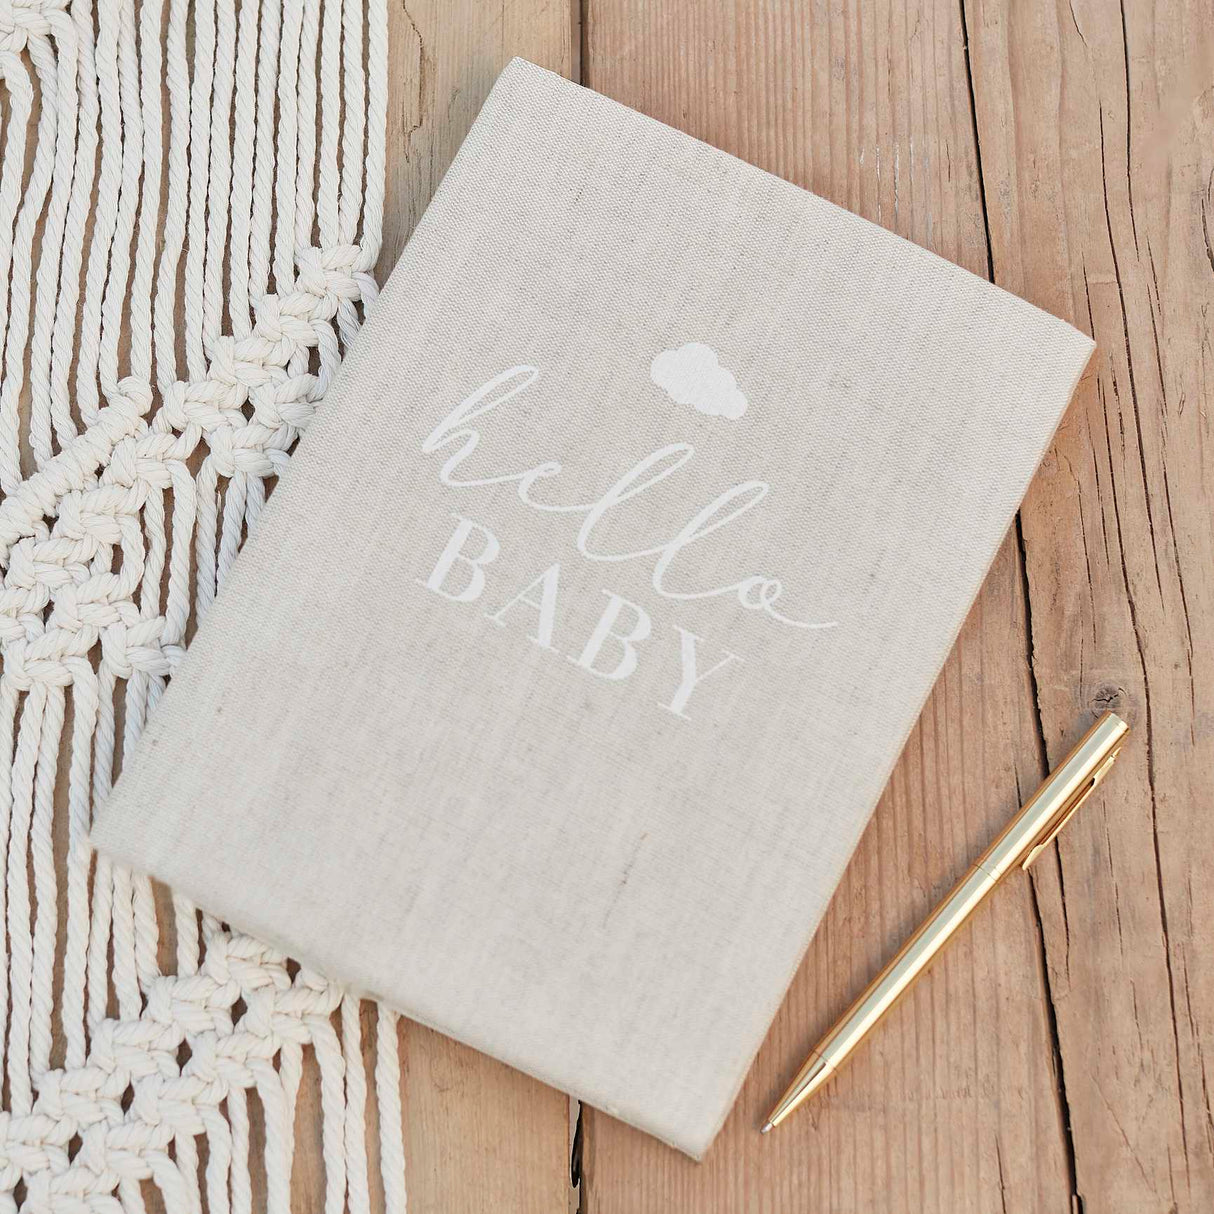 Baby Journal - Linen